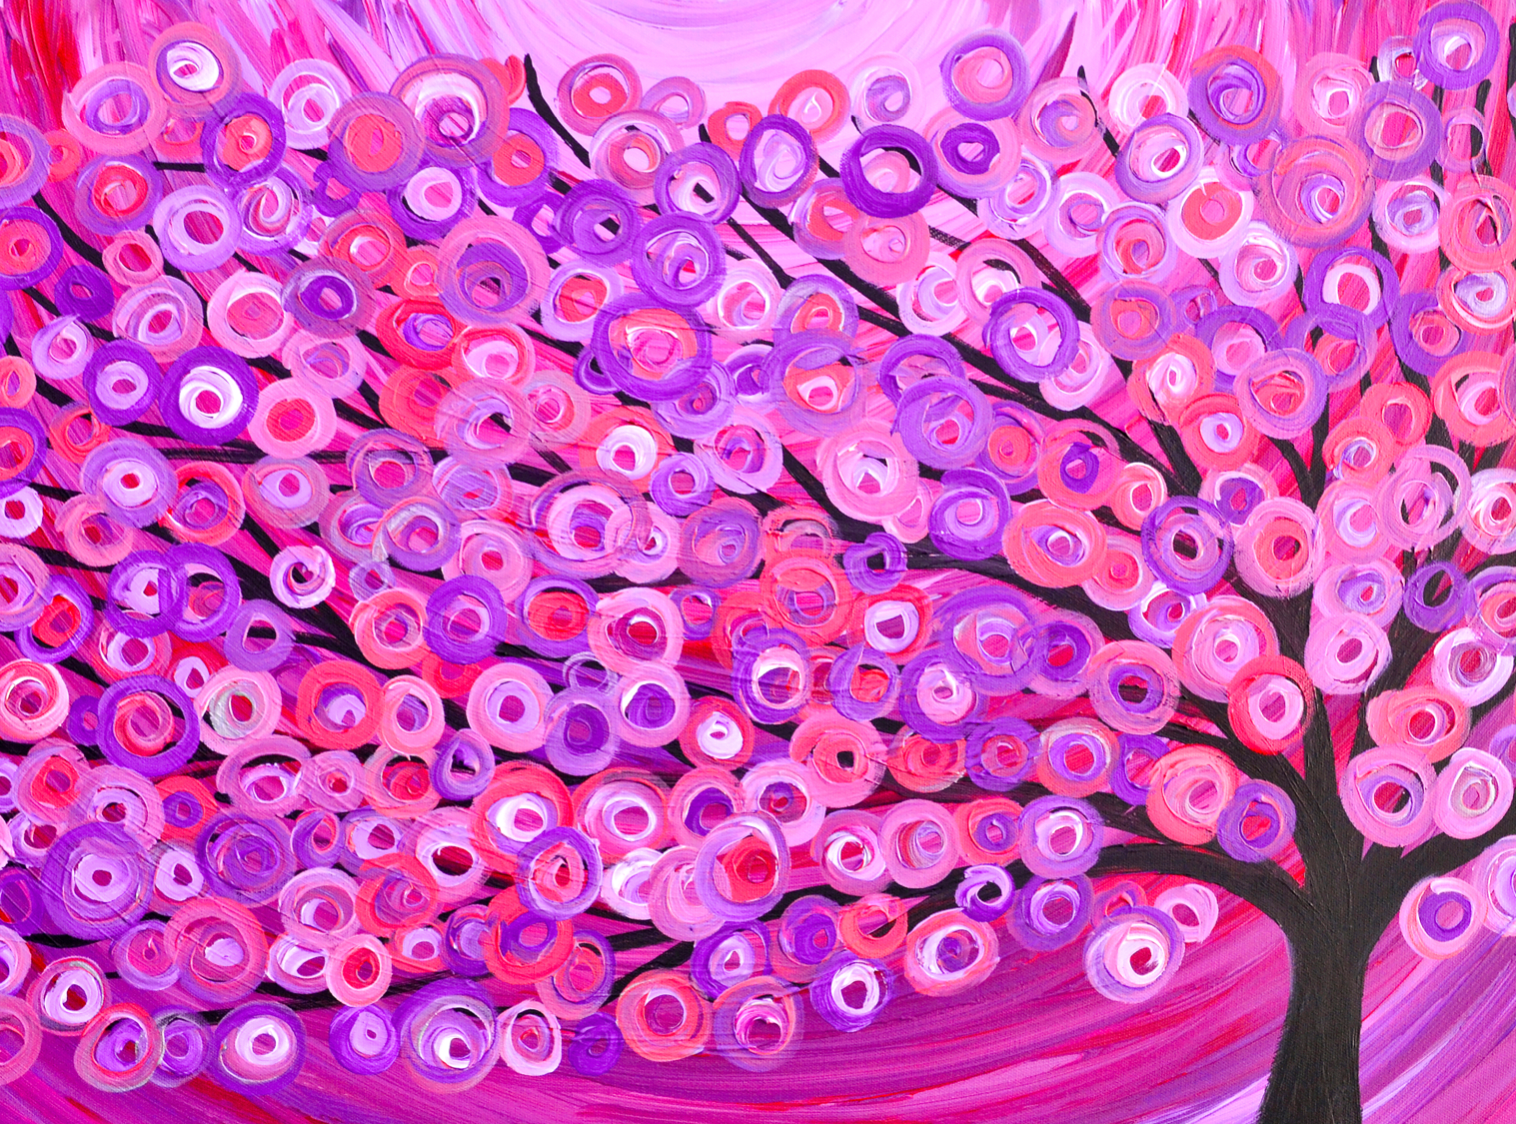 Pink Tree Canvas Print